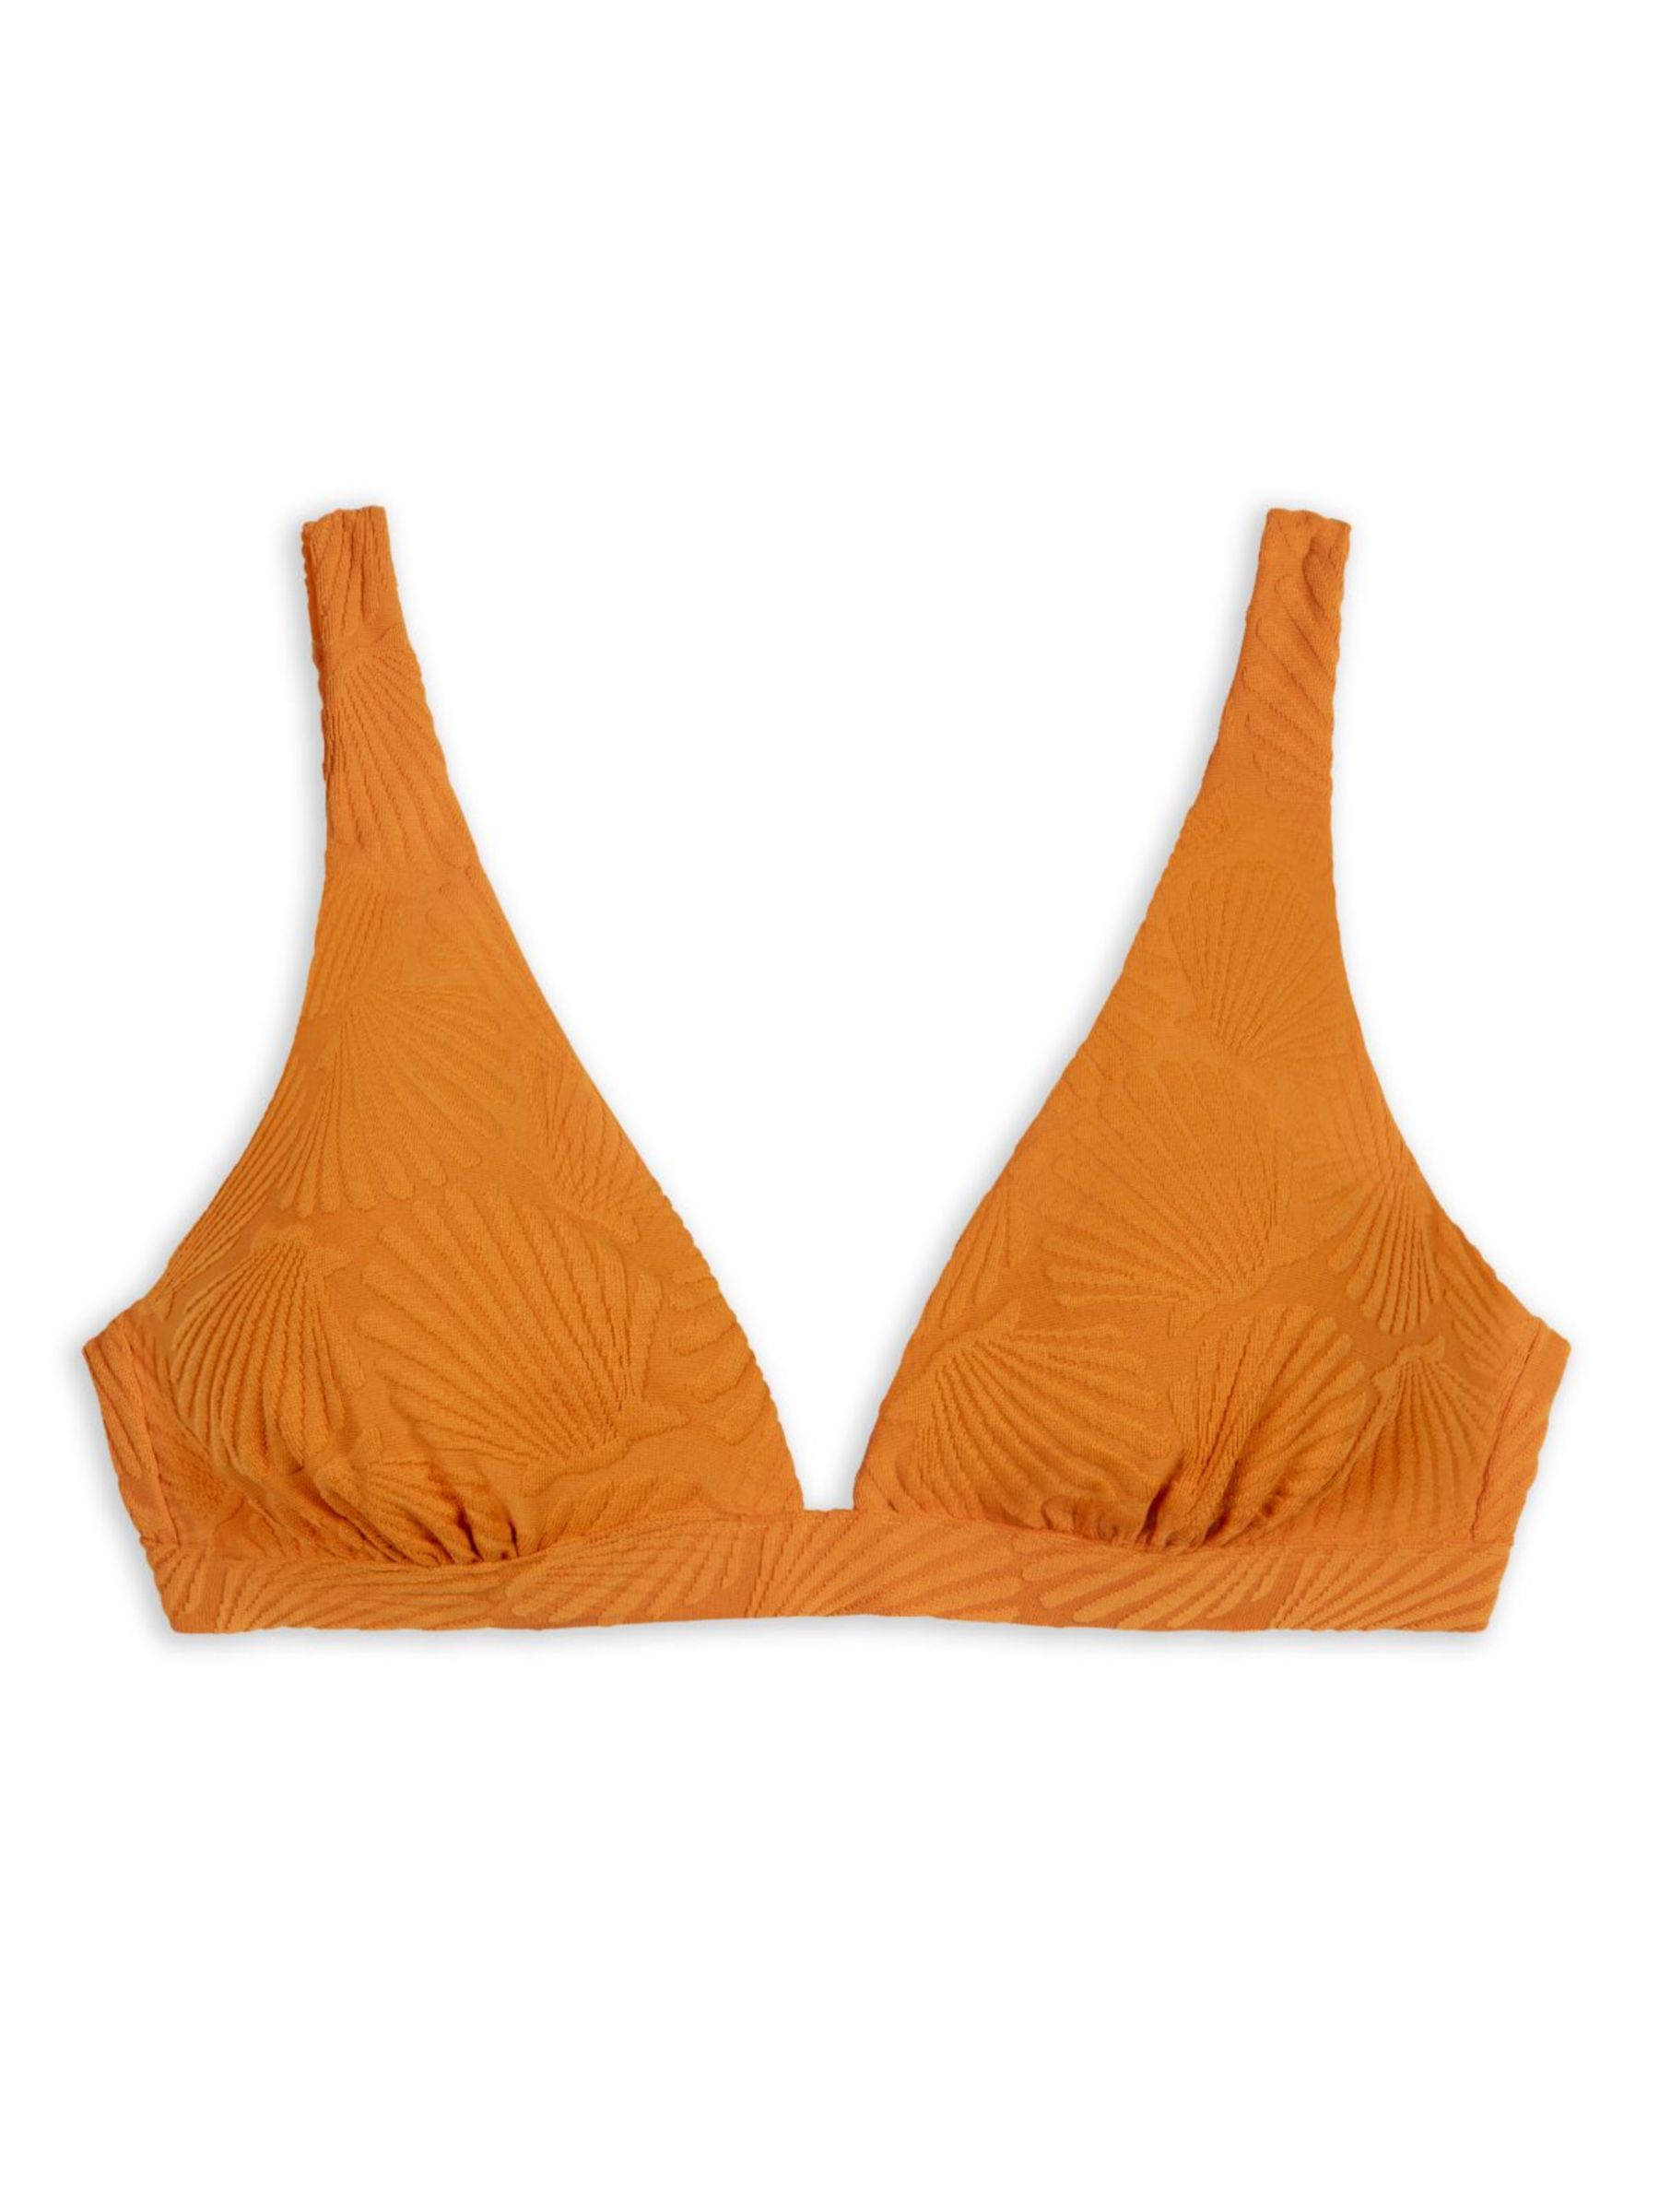 Chelsea Peers Jacquard Shell Reversible Triangle Bikini Top, Orange, 6